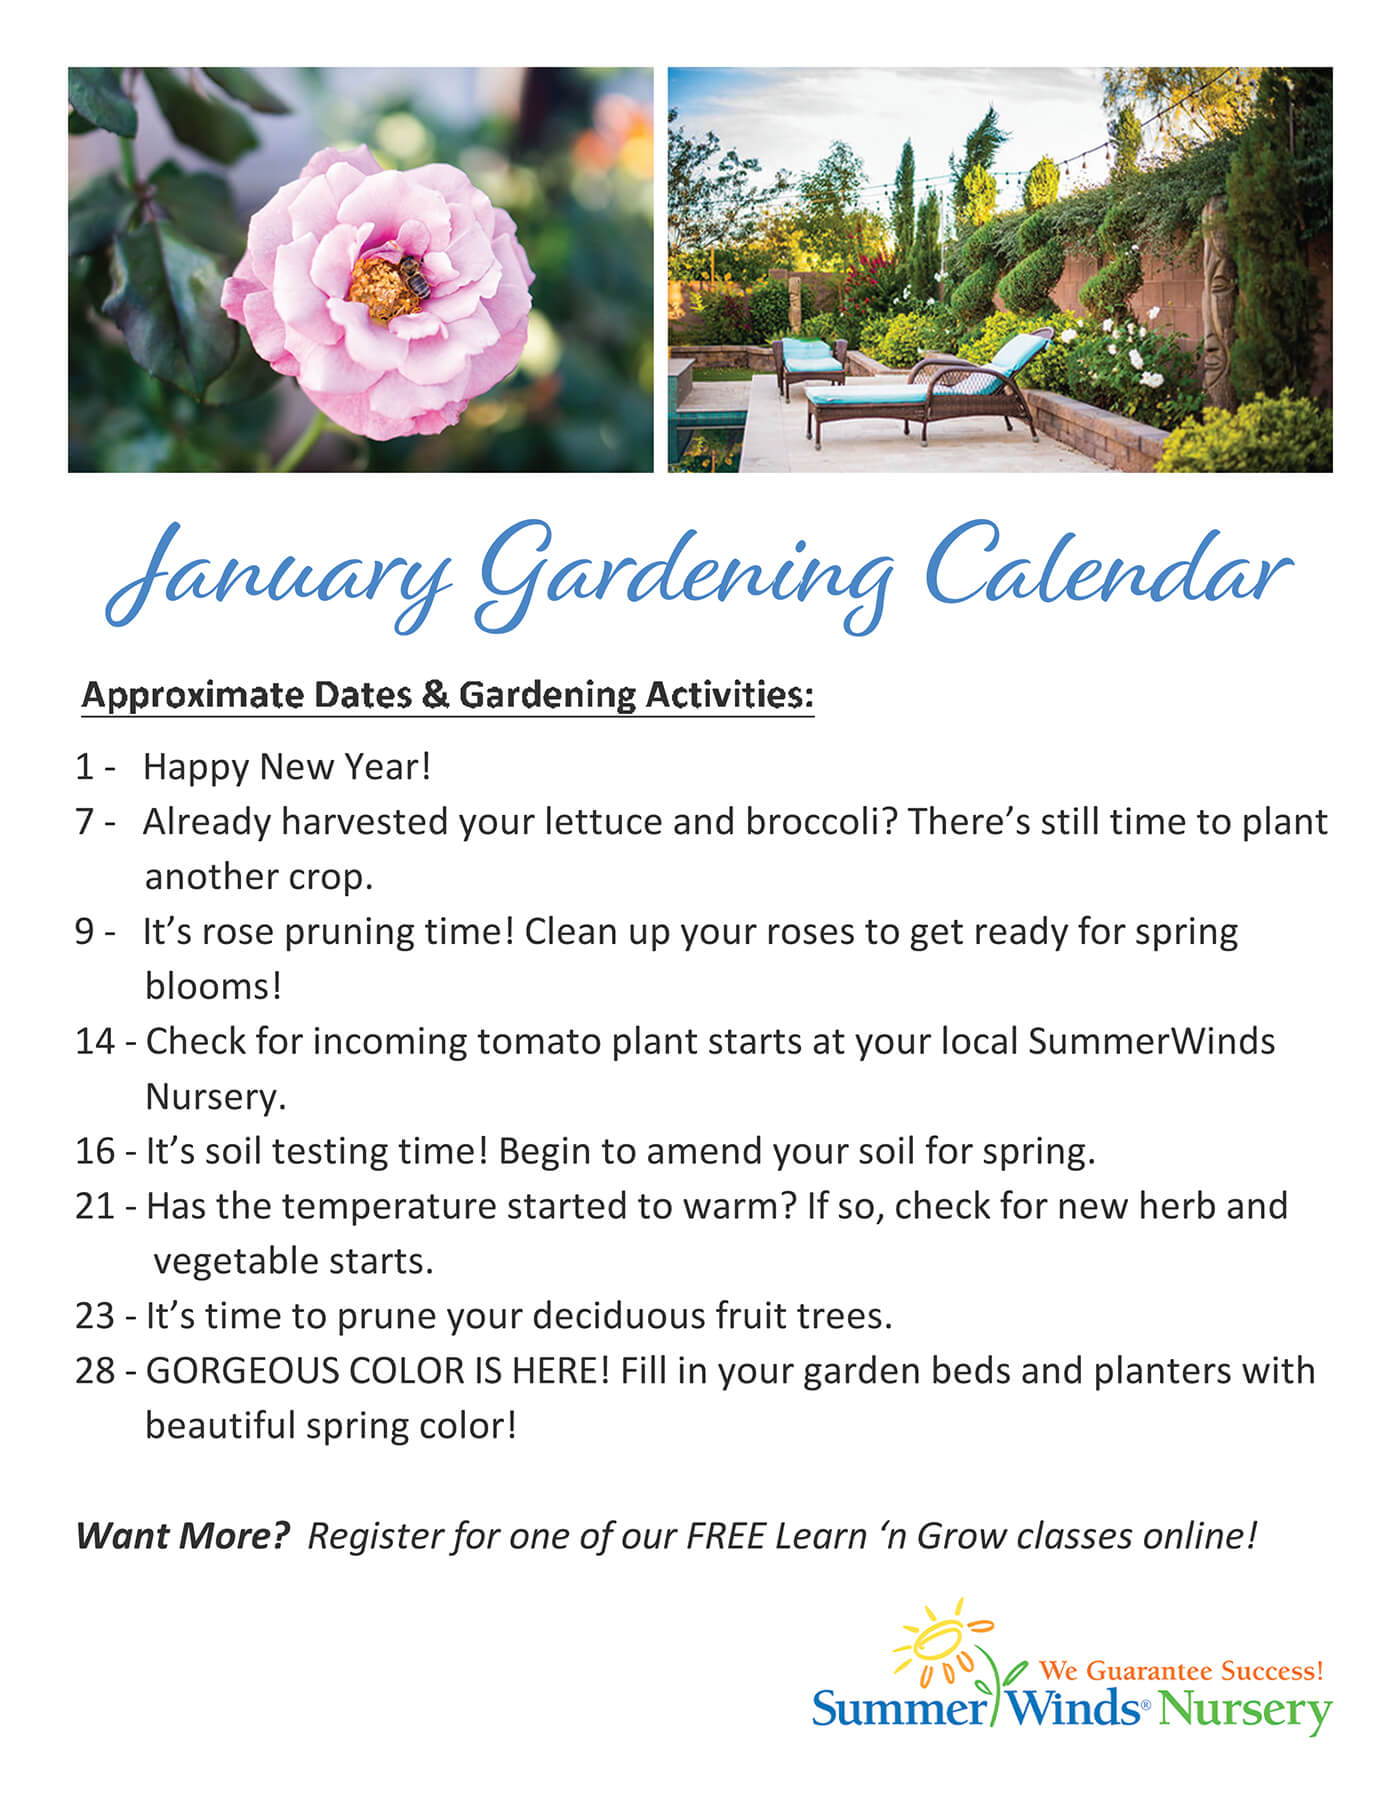 A jpg image of our January Gardening Calendar flyer